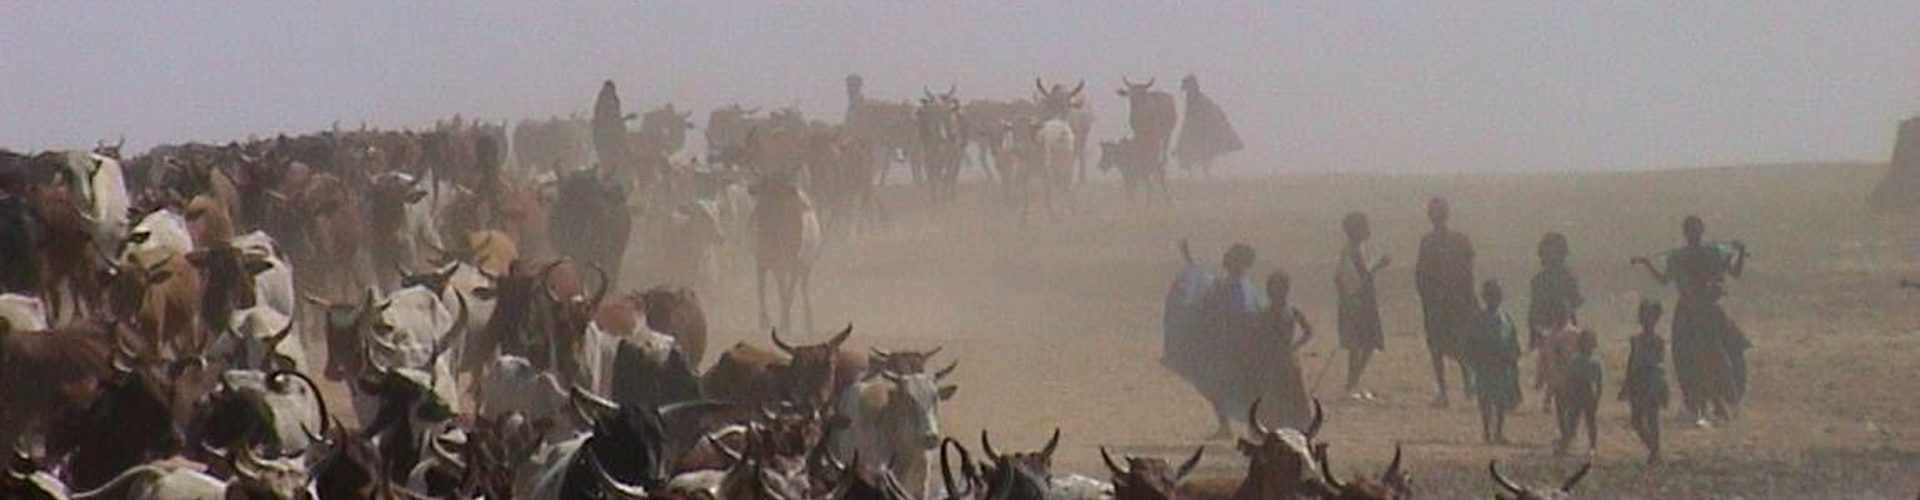 Cattle crossing a river in Mali.